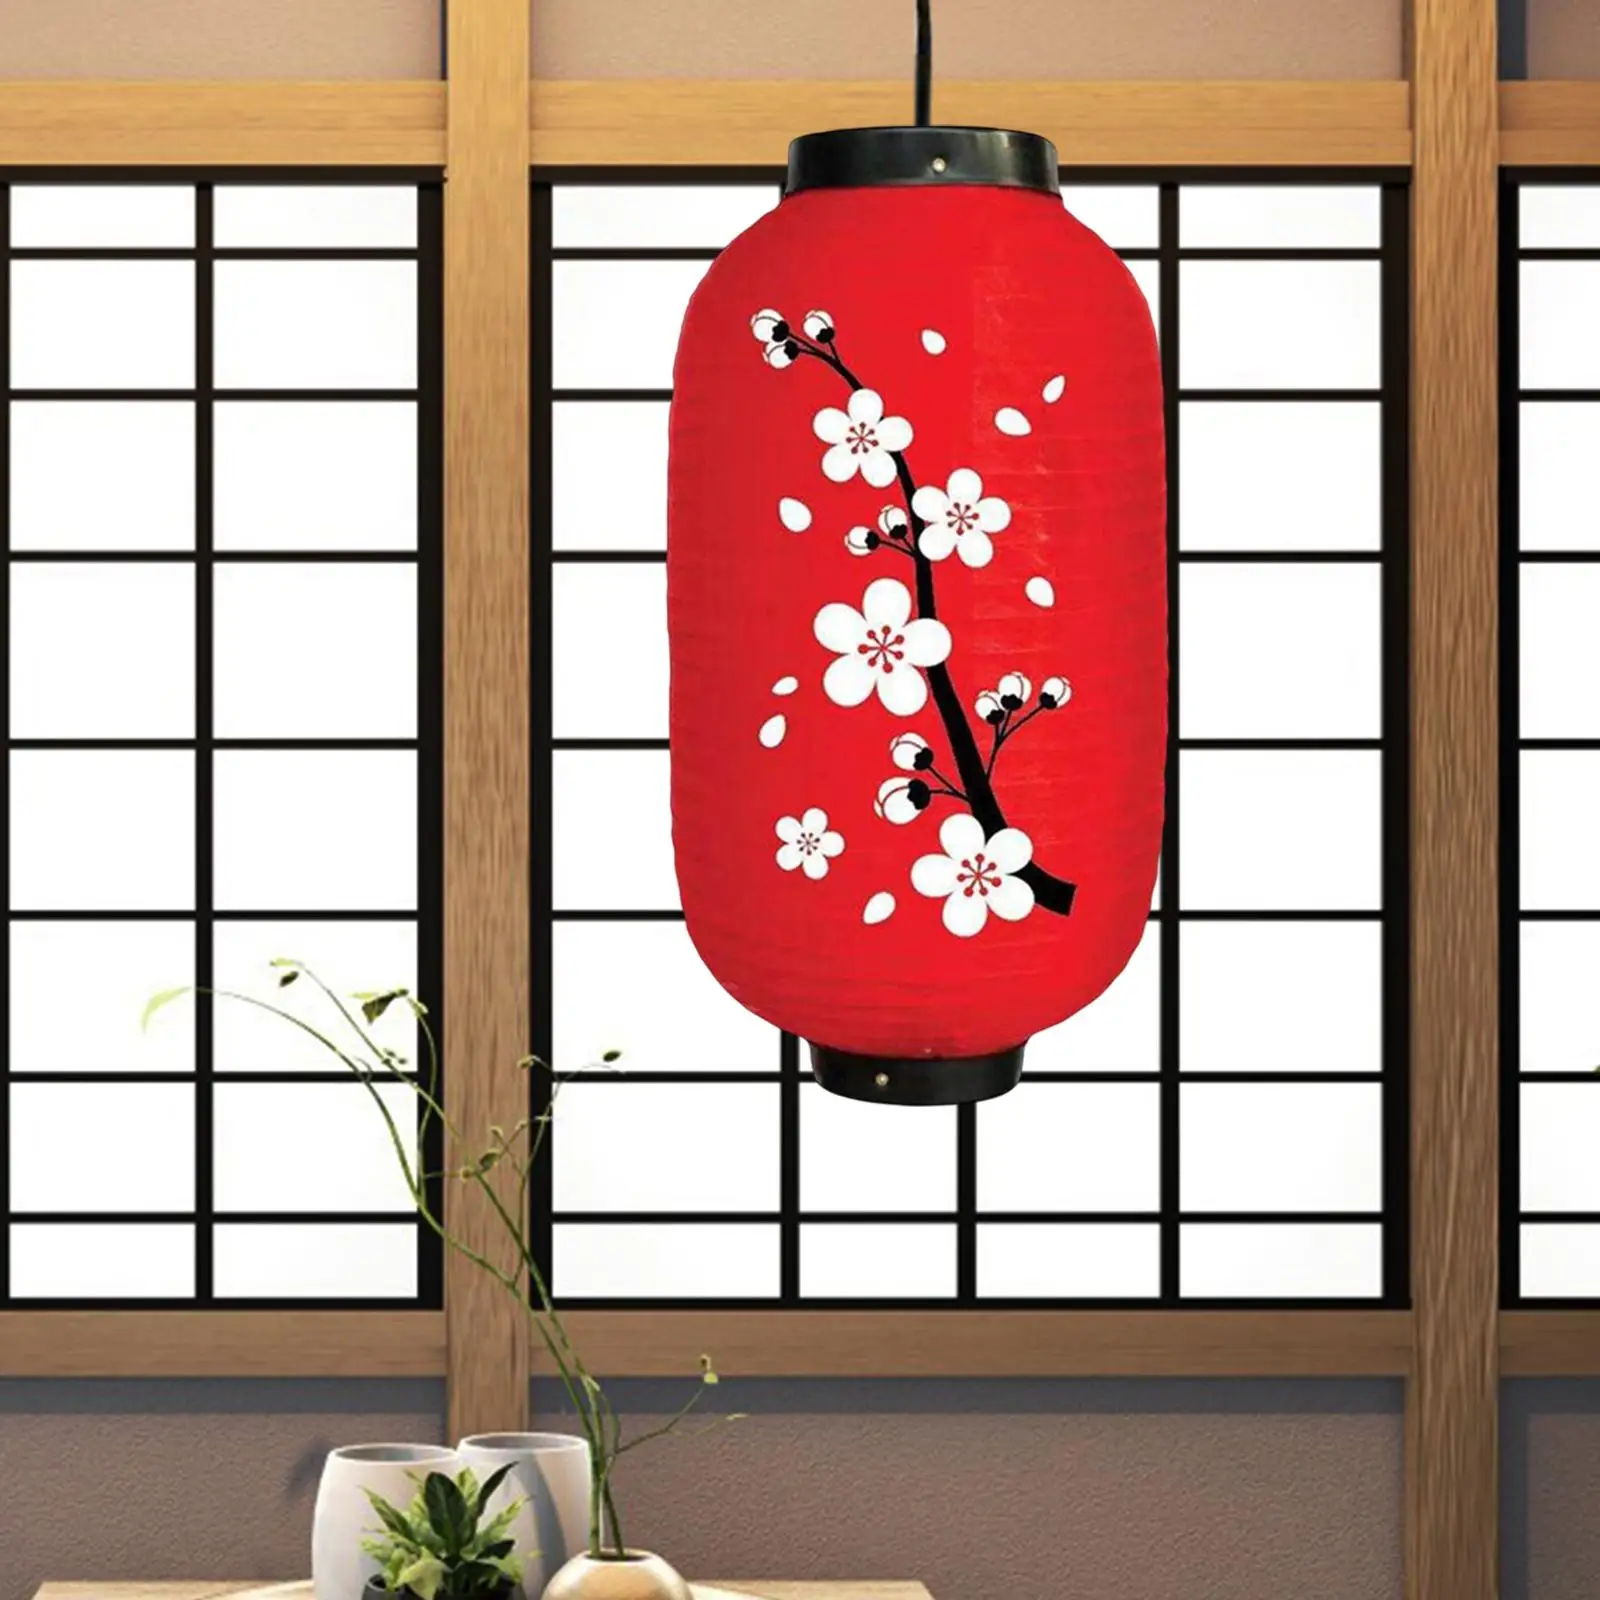 Japanese Style Lantern Lamp Shade Cloth Lights for Restaurant Celebration